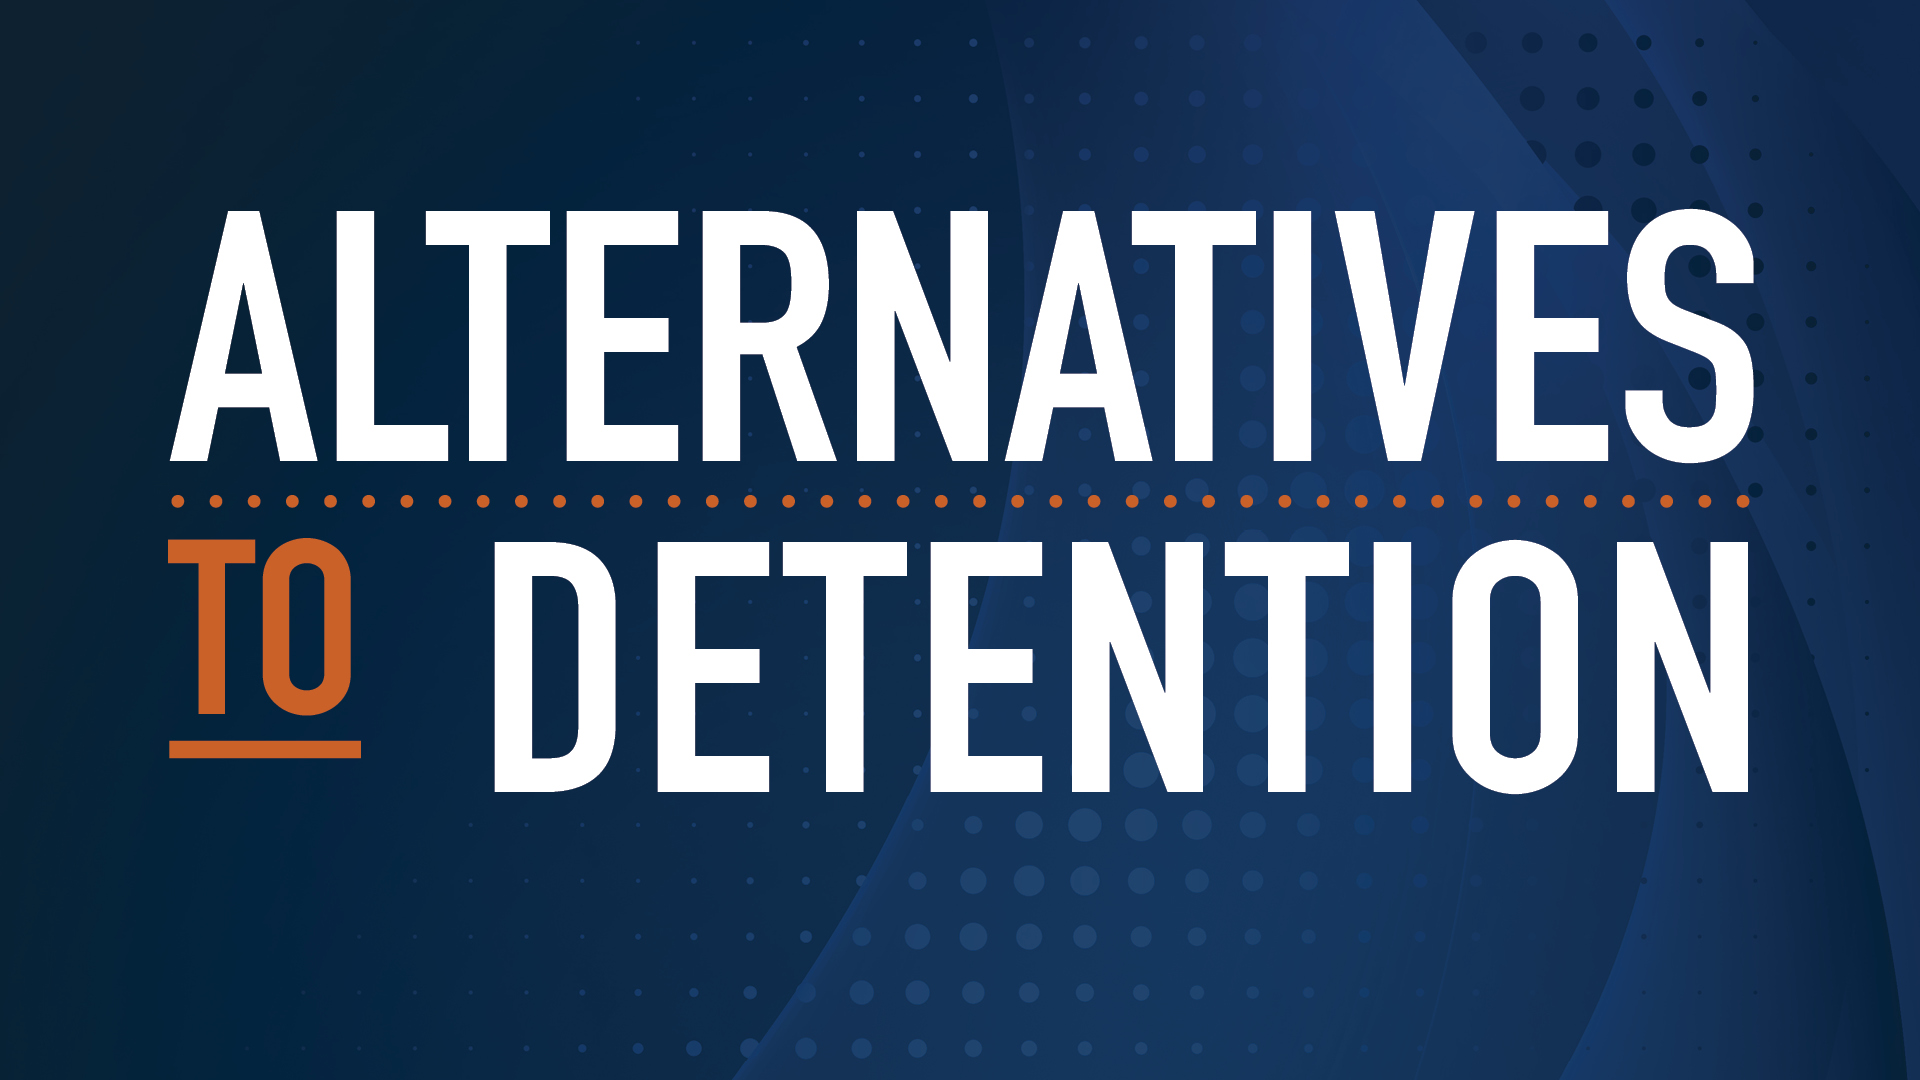 Alternatives to Detention